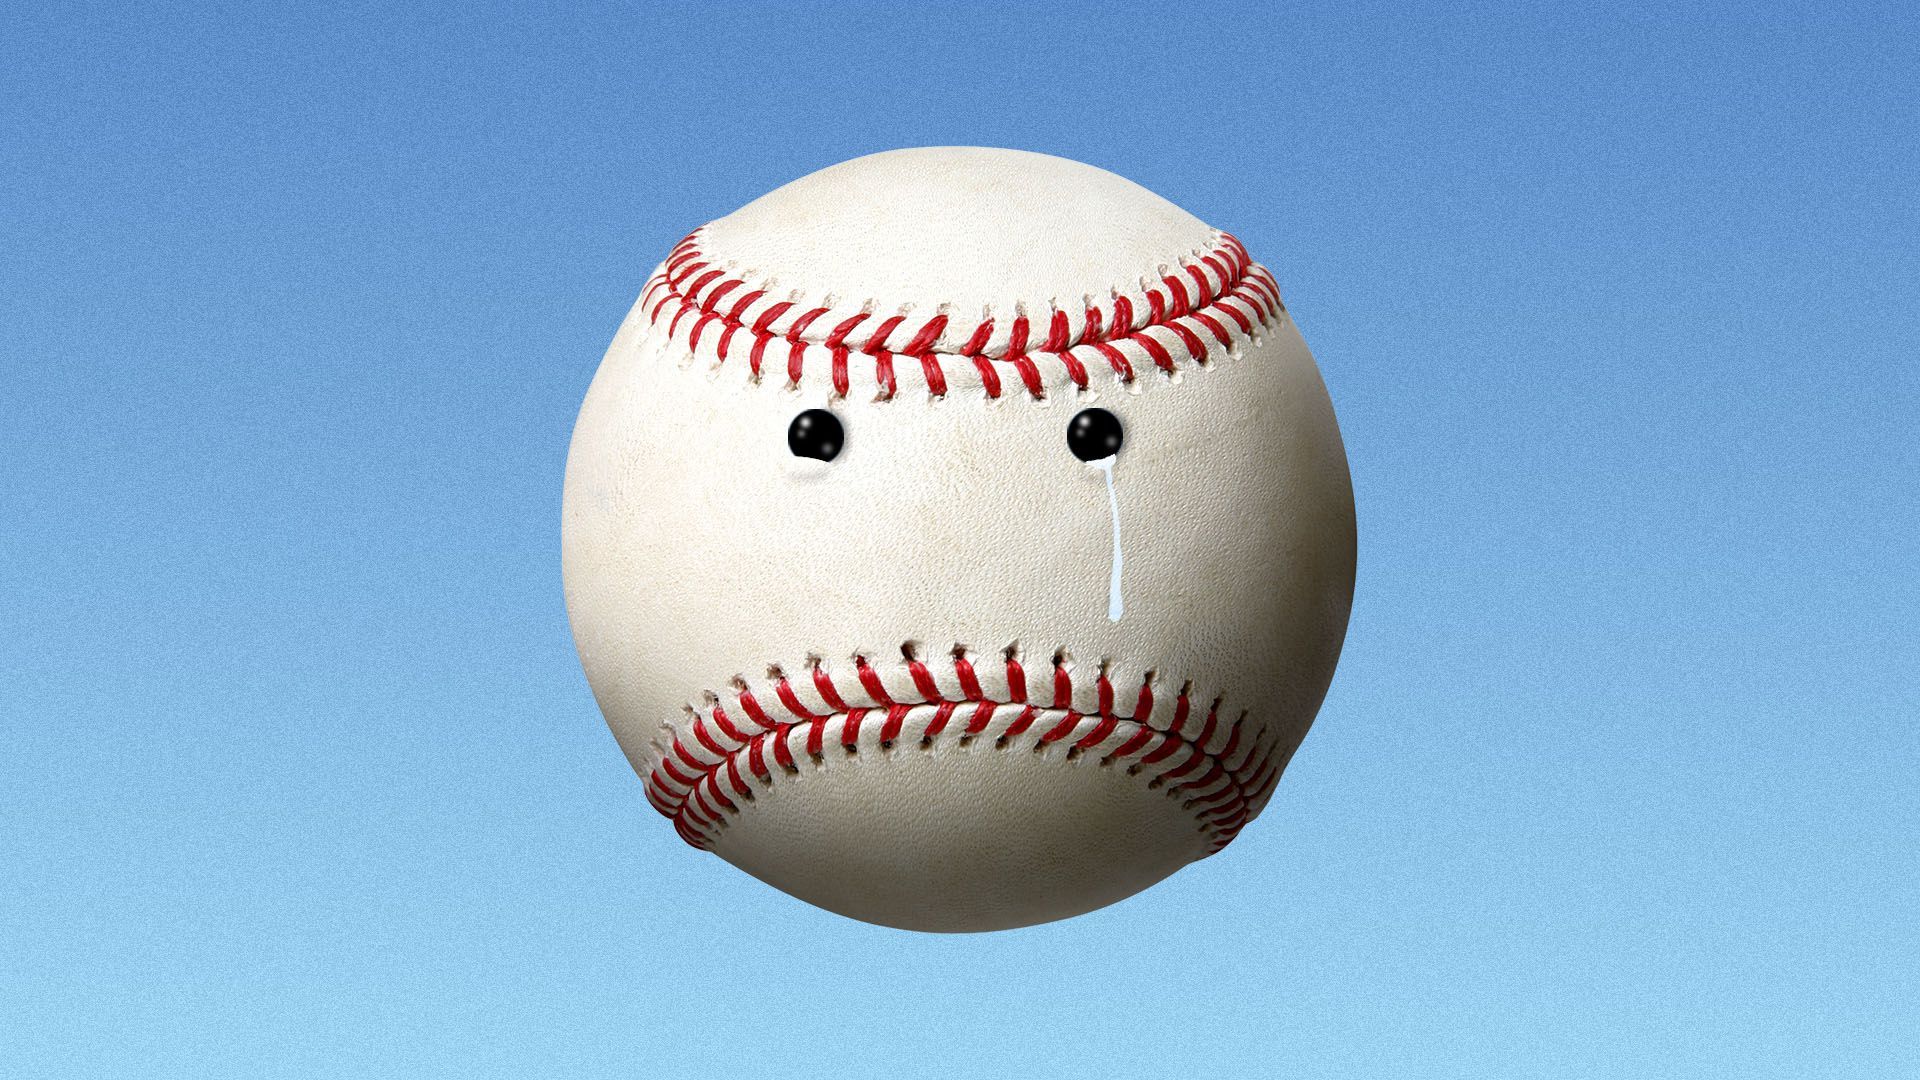 Illustration of a crying baseball